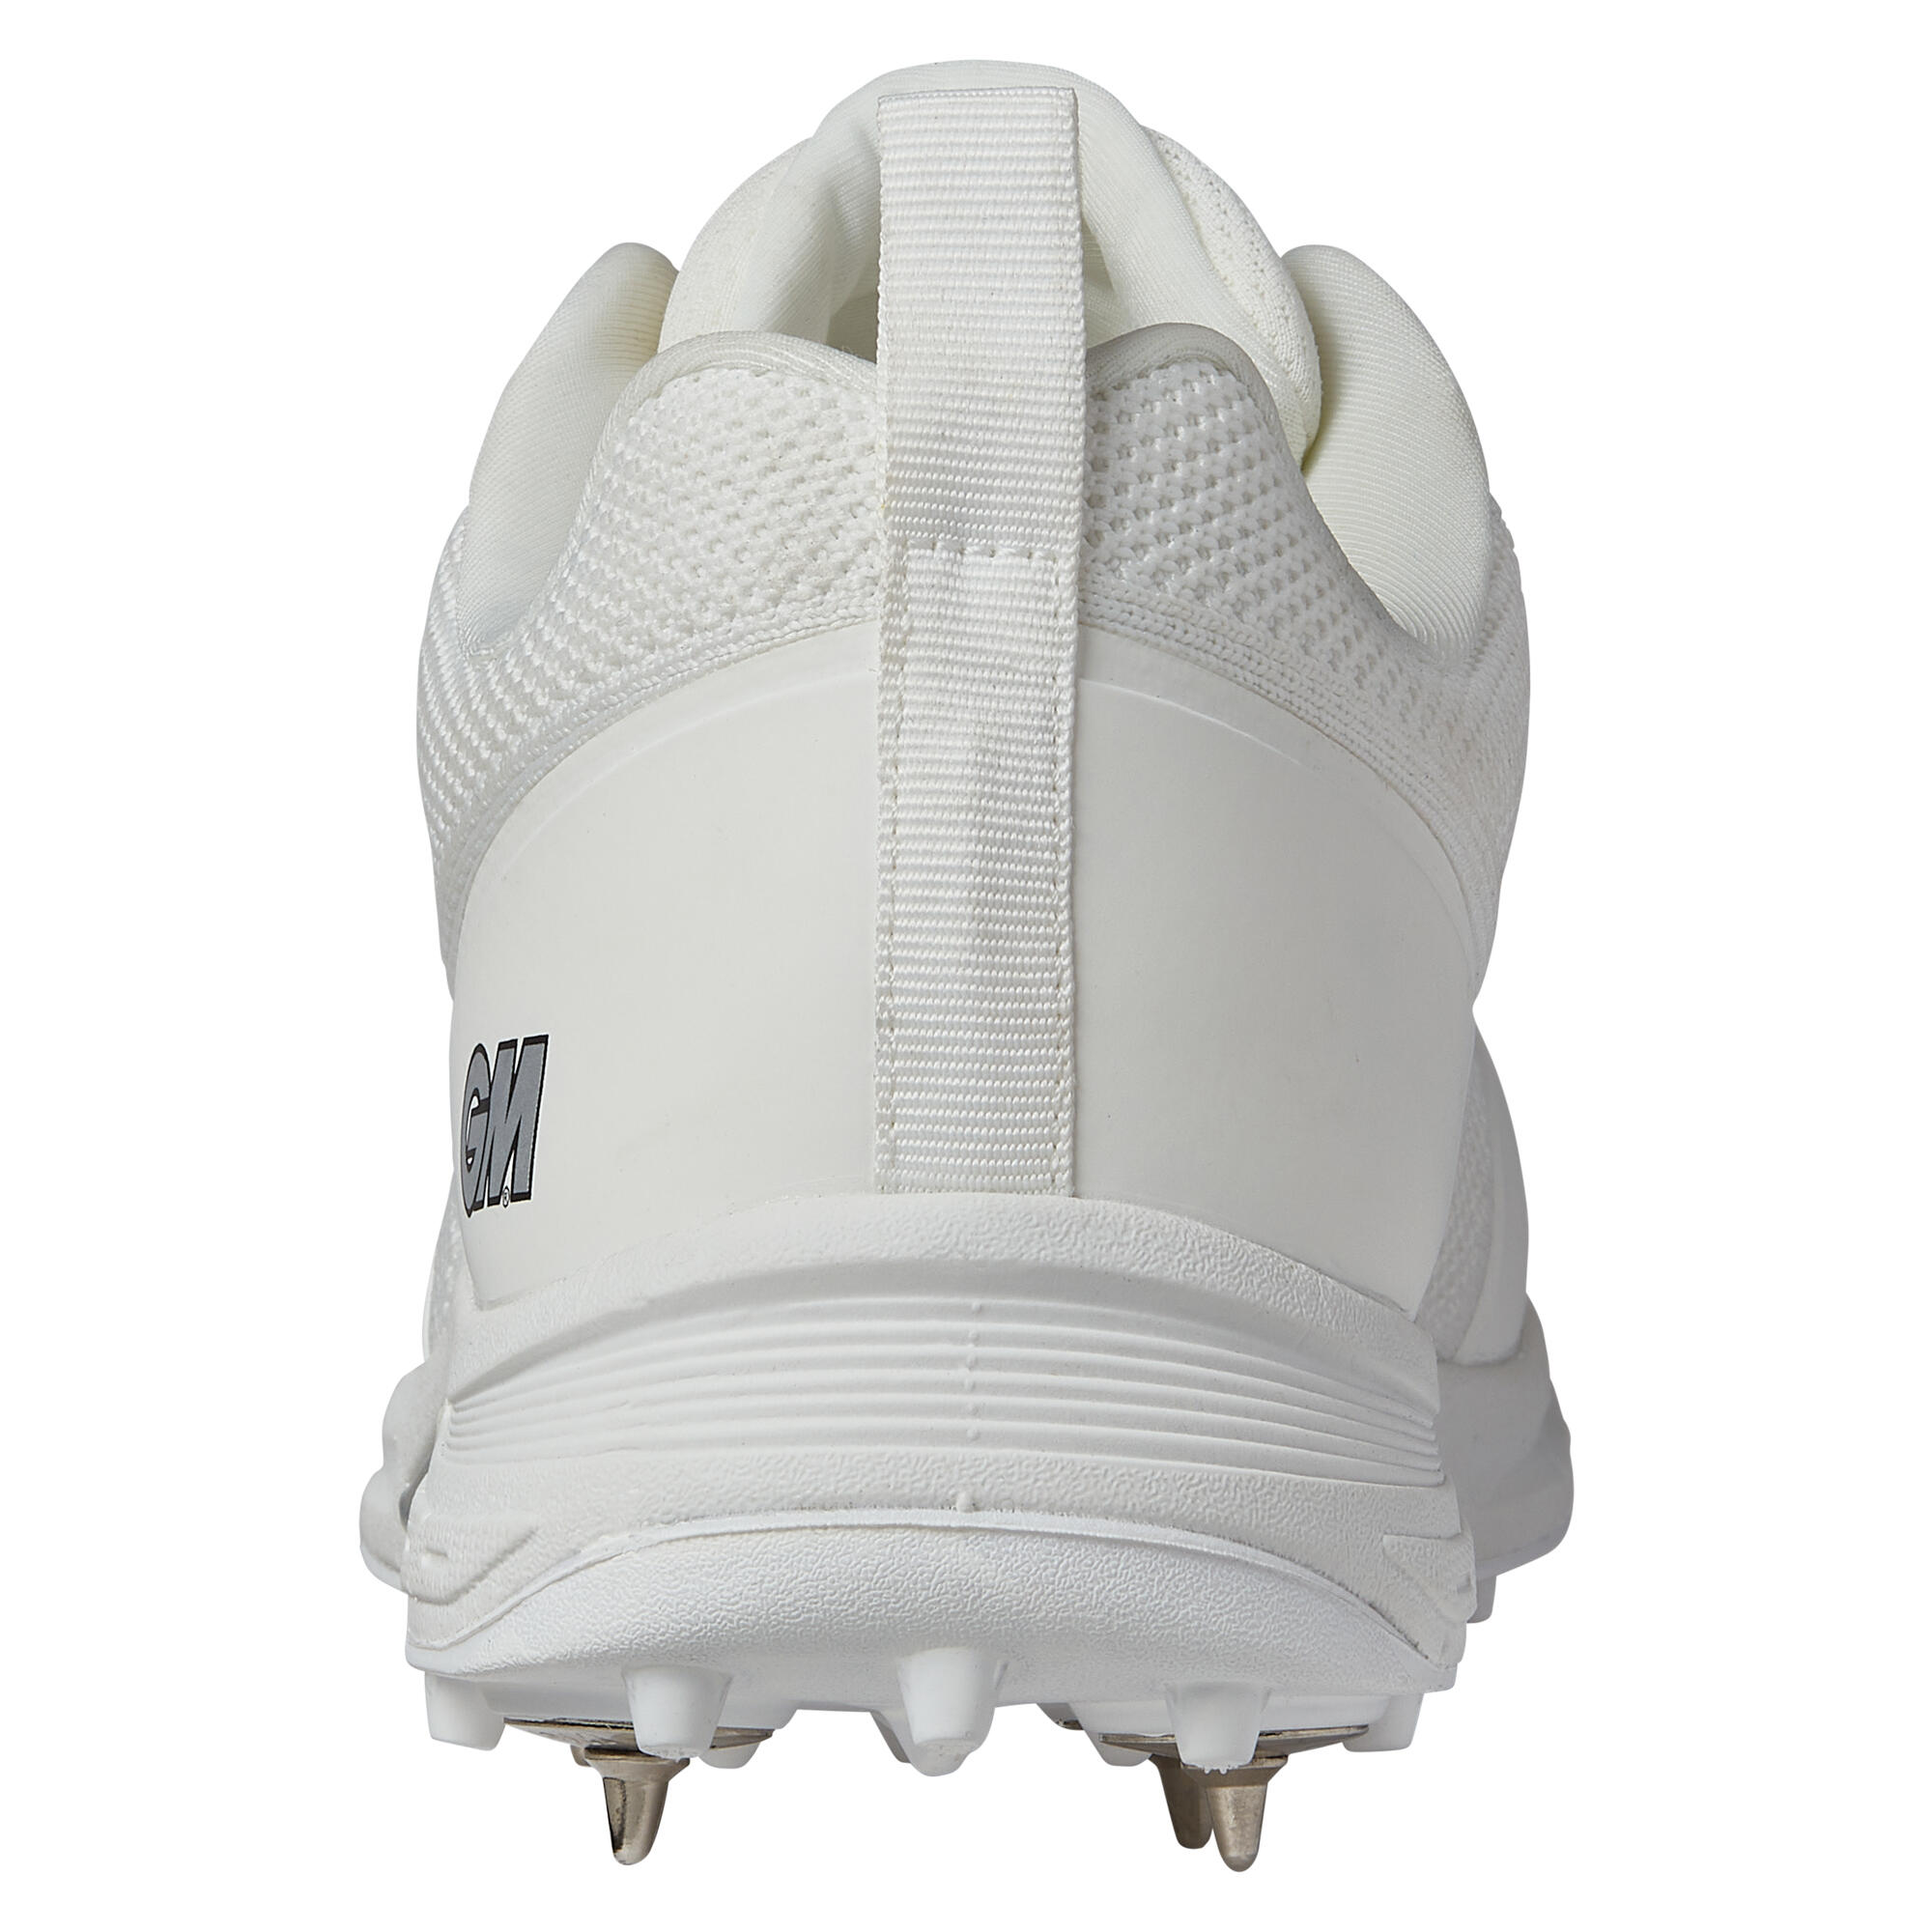 GM Kryos Cricket Spiked shoe junior sizes 3-6 4/4